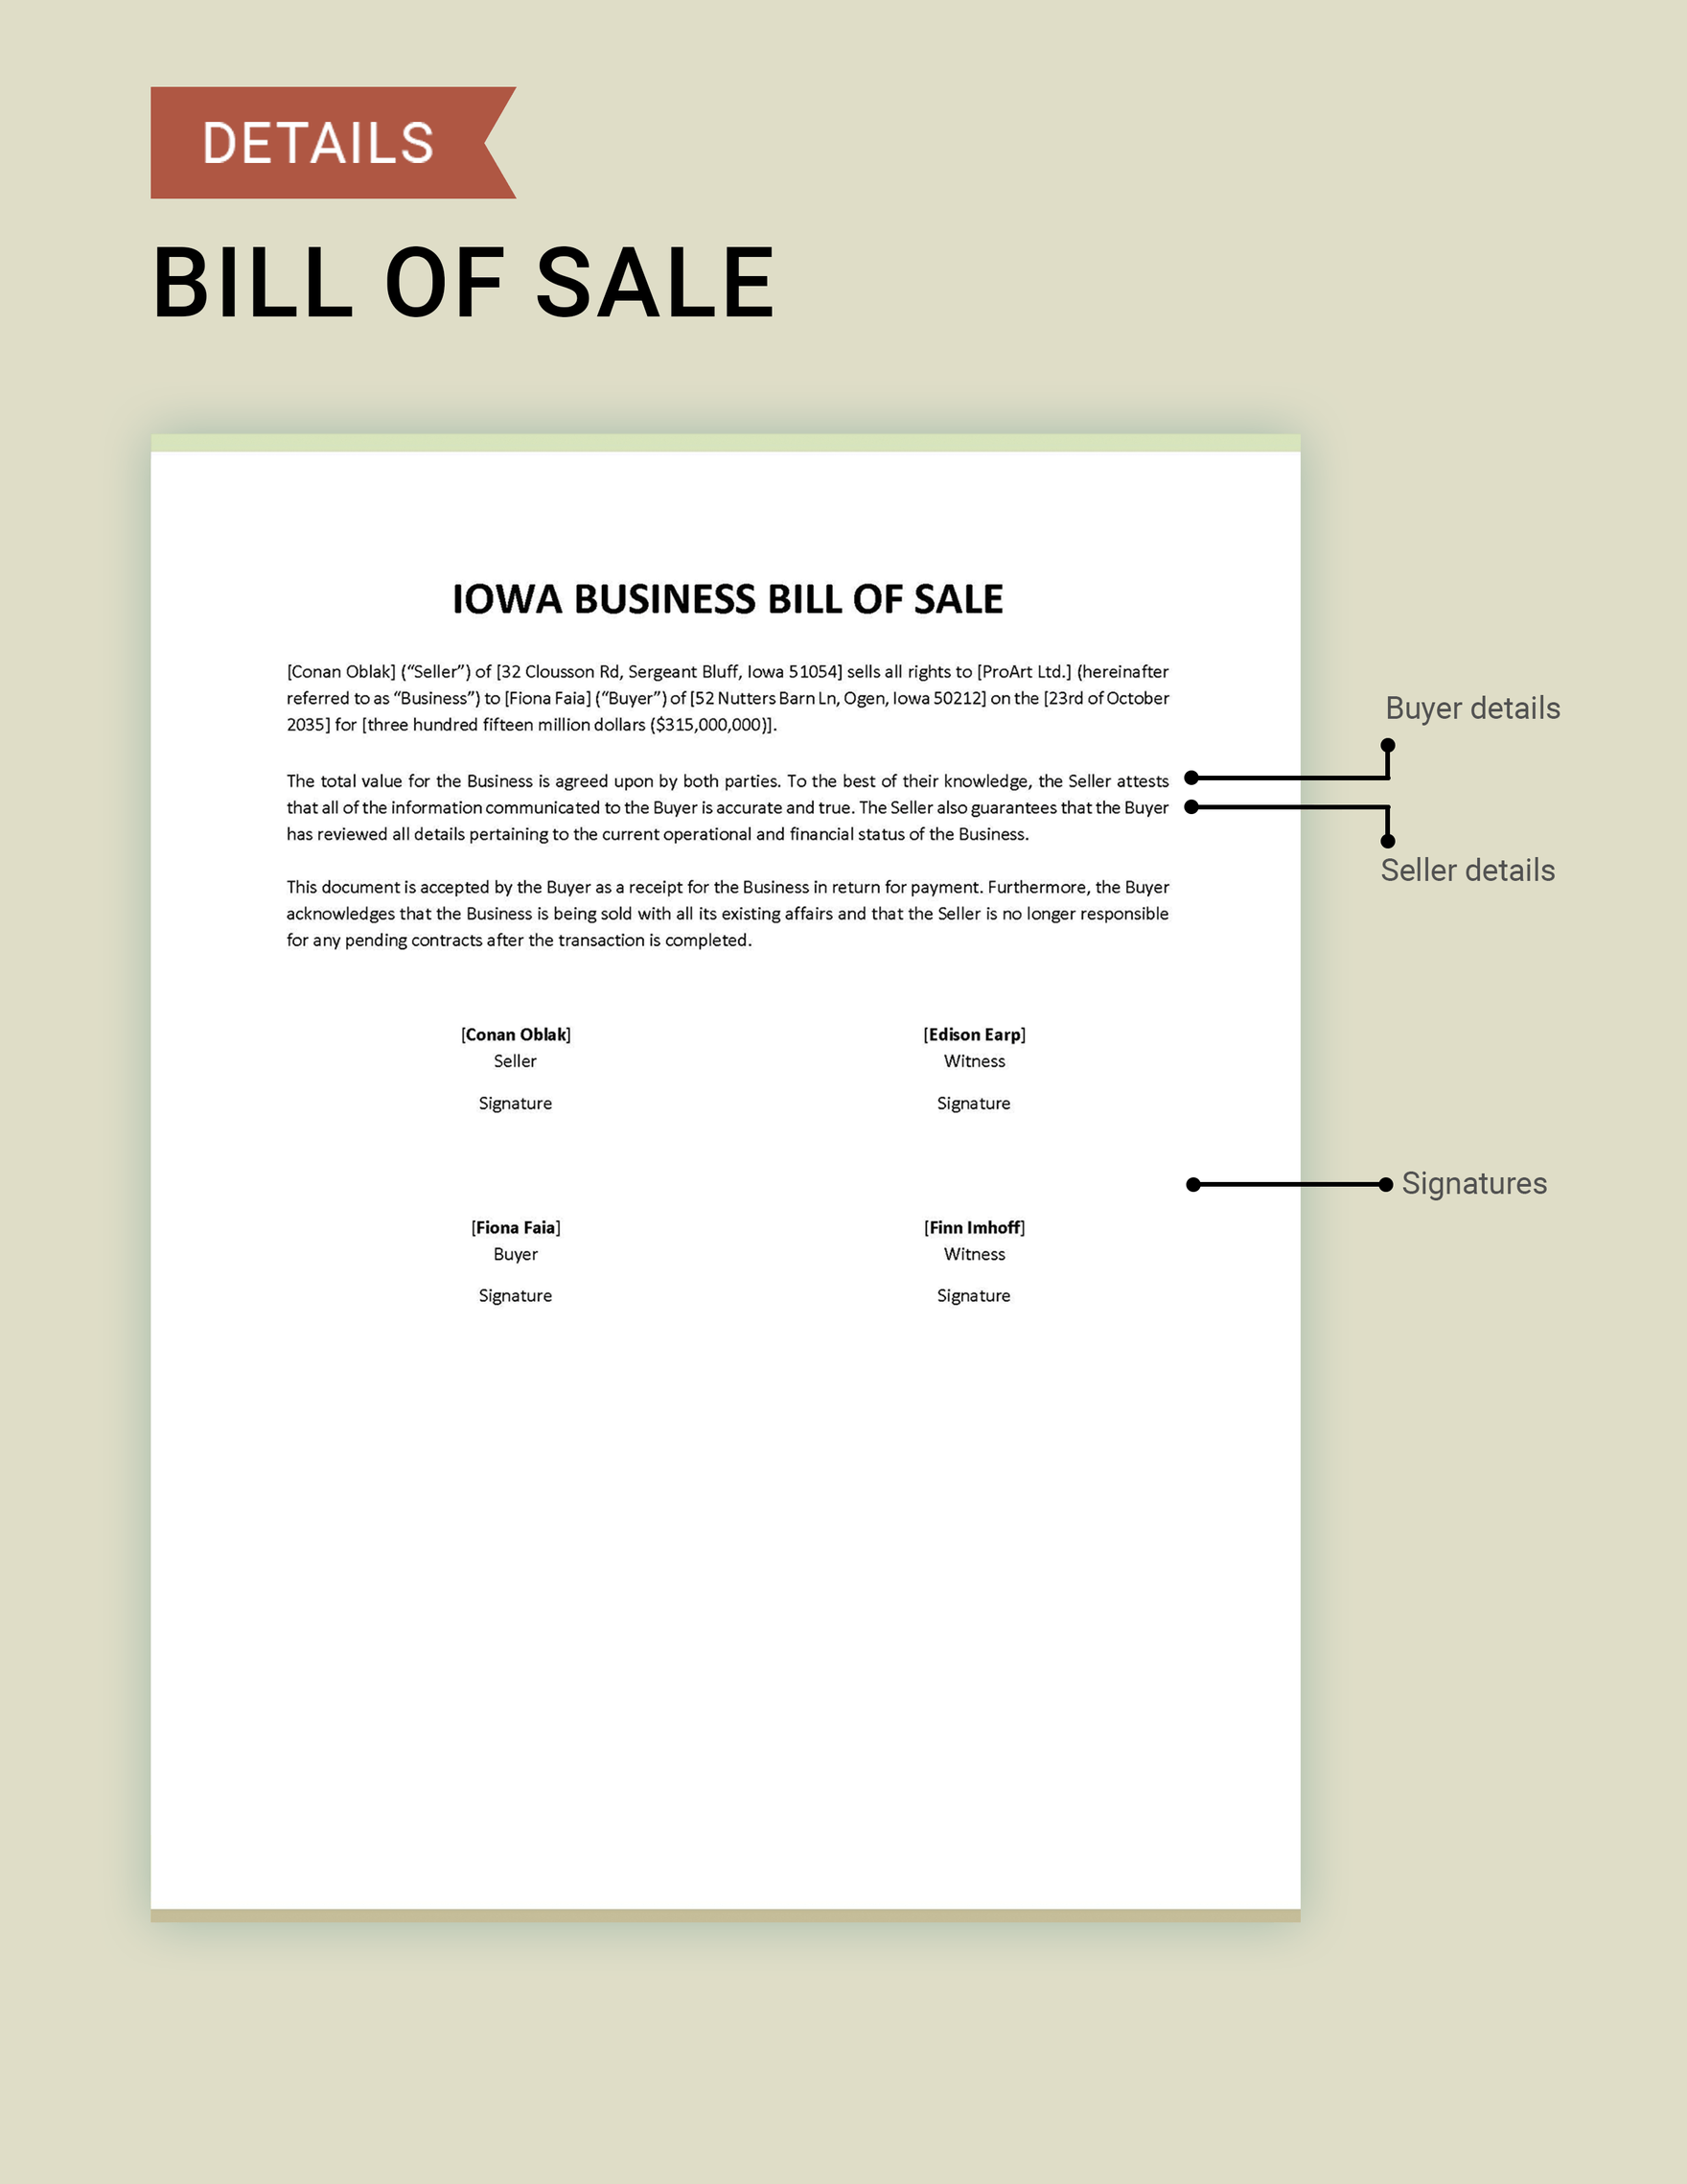 Iowa Business Bill of Sale Template